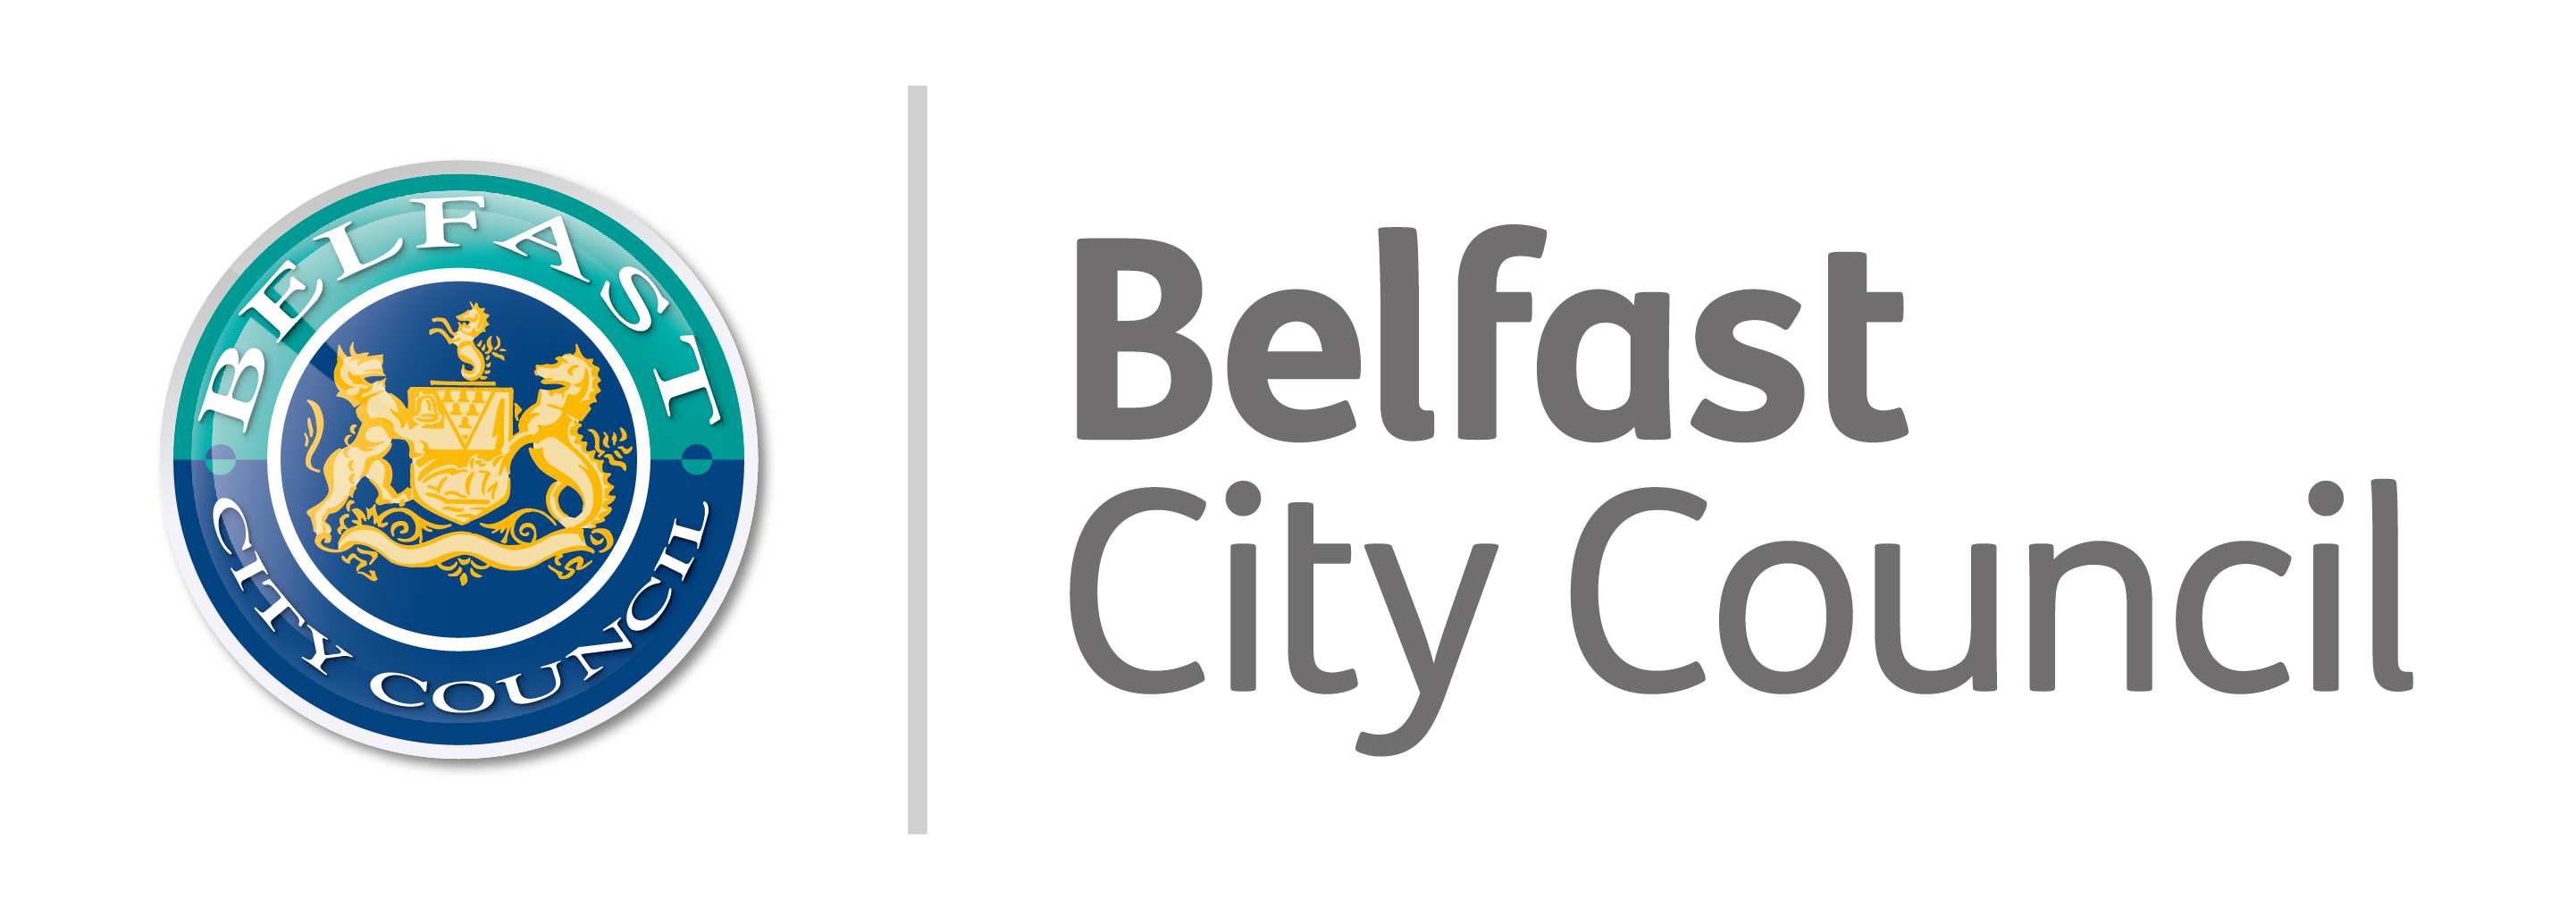 Belfast City Council Go Social Programme Workshop: Business Planning - Navigating your social enterprise / co-operative journey